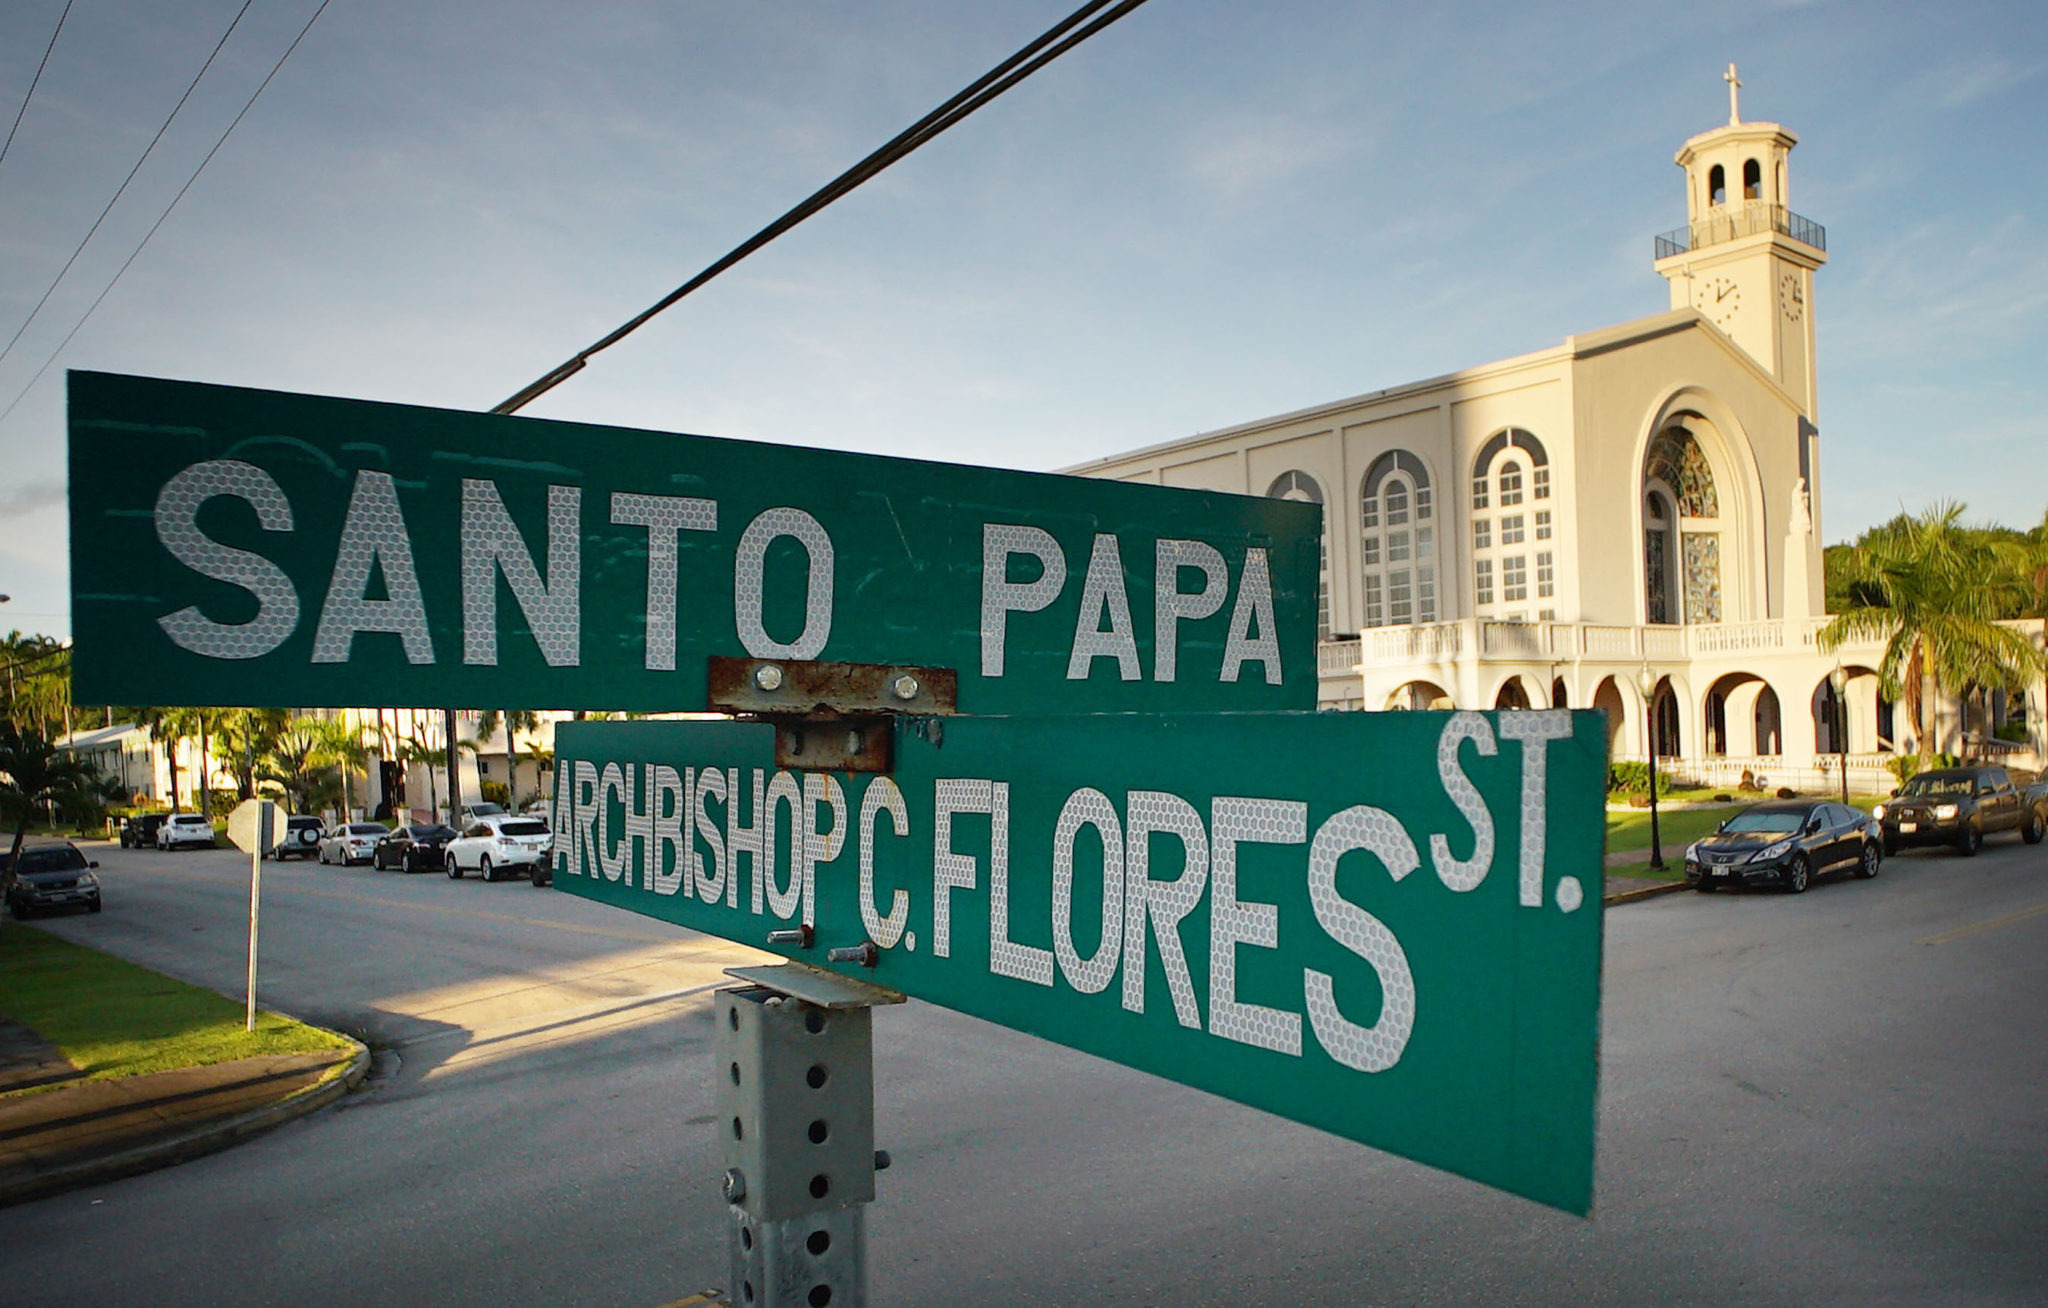 Santo Papa and Archbishop Flores street intersection in Hagatna, Guam near the Cathedral. Dulce Nombre de Maria Cathedral Basilica located in Hagatna, Guam